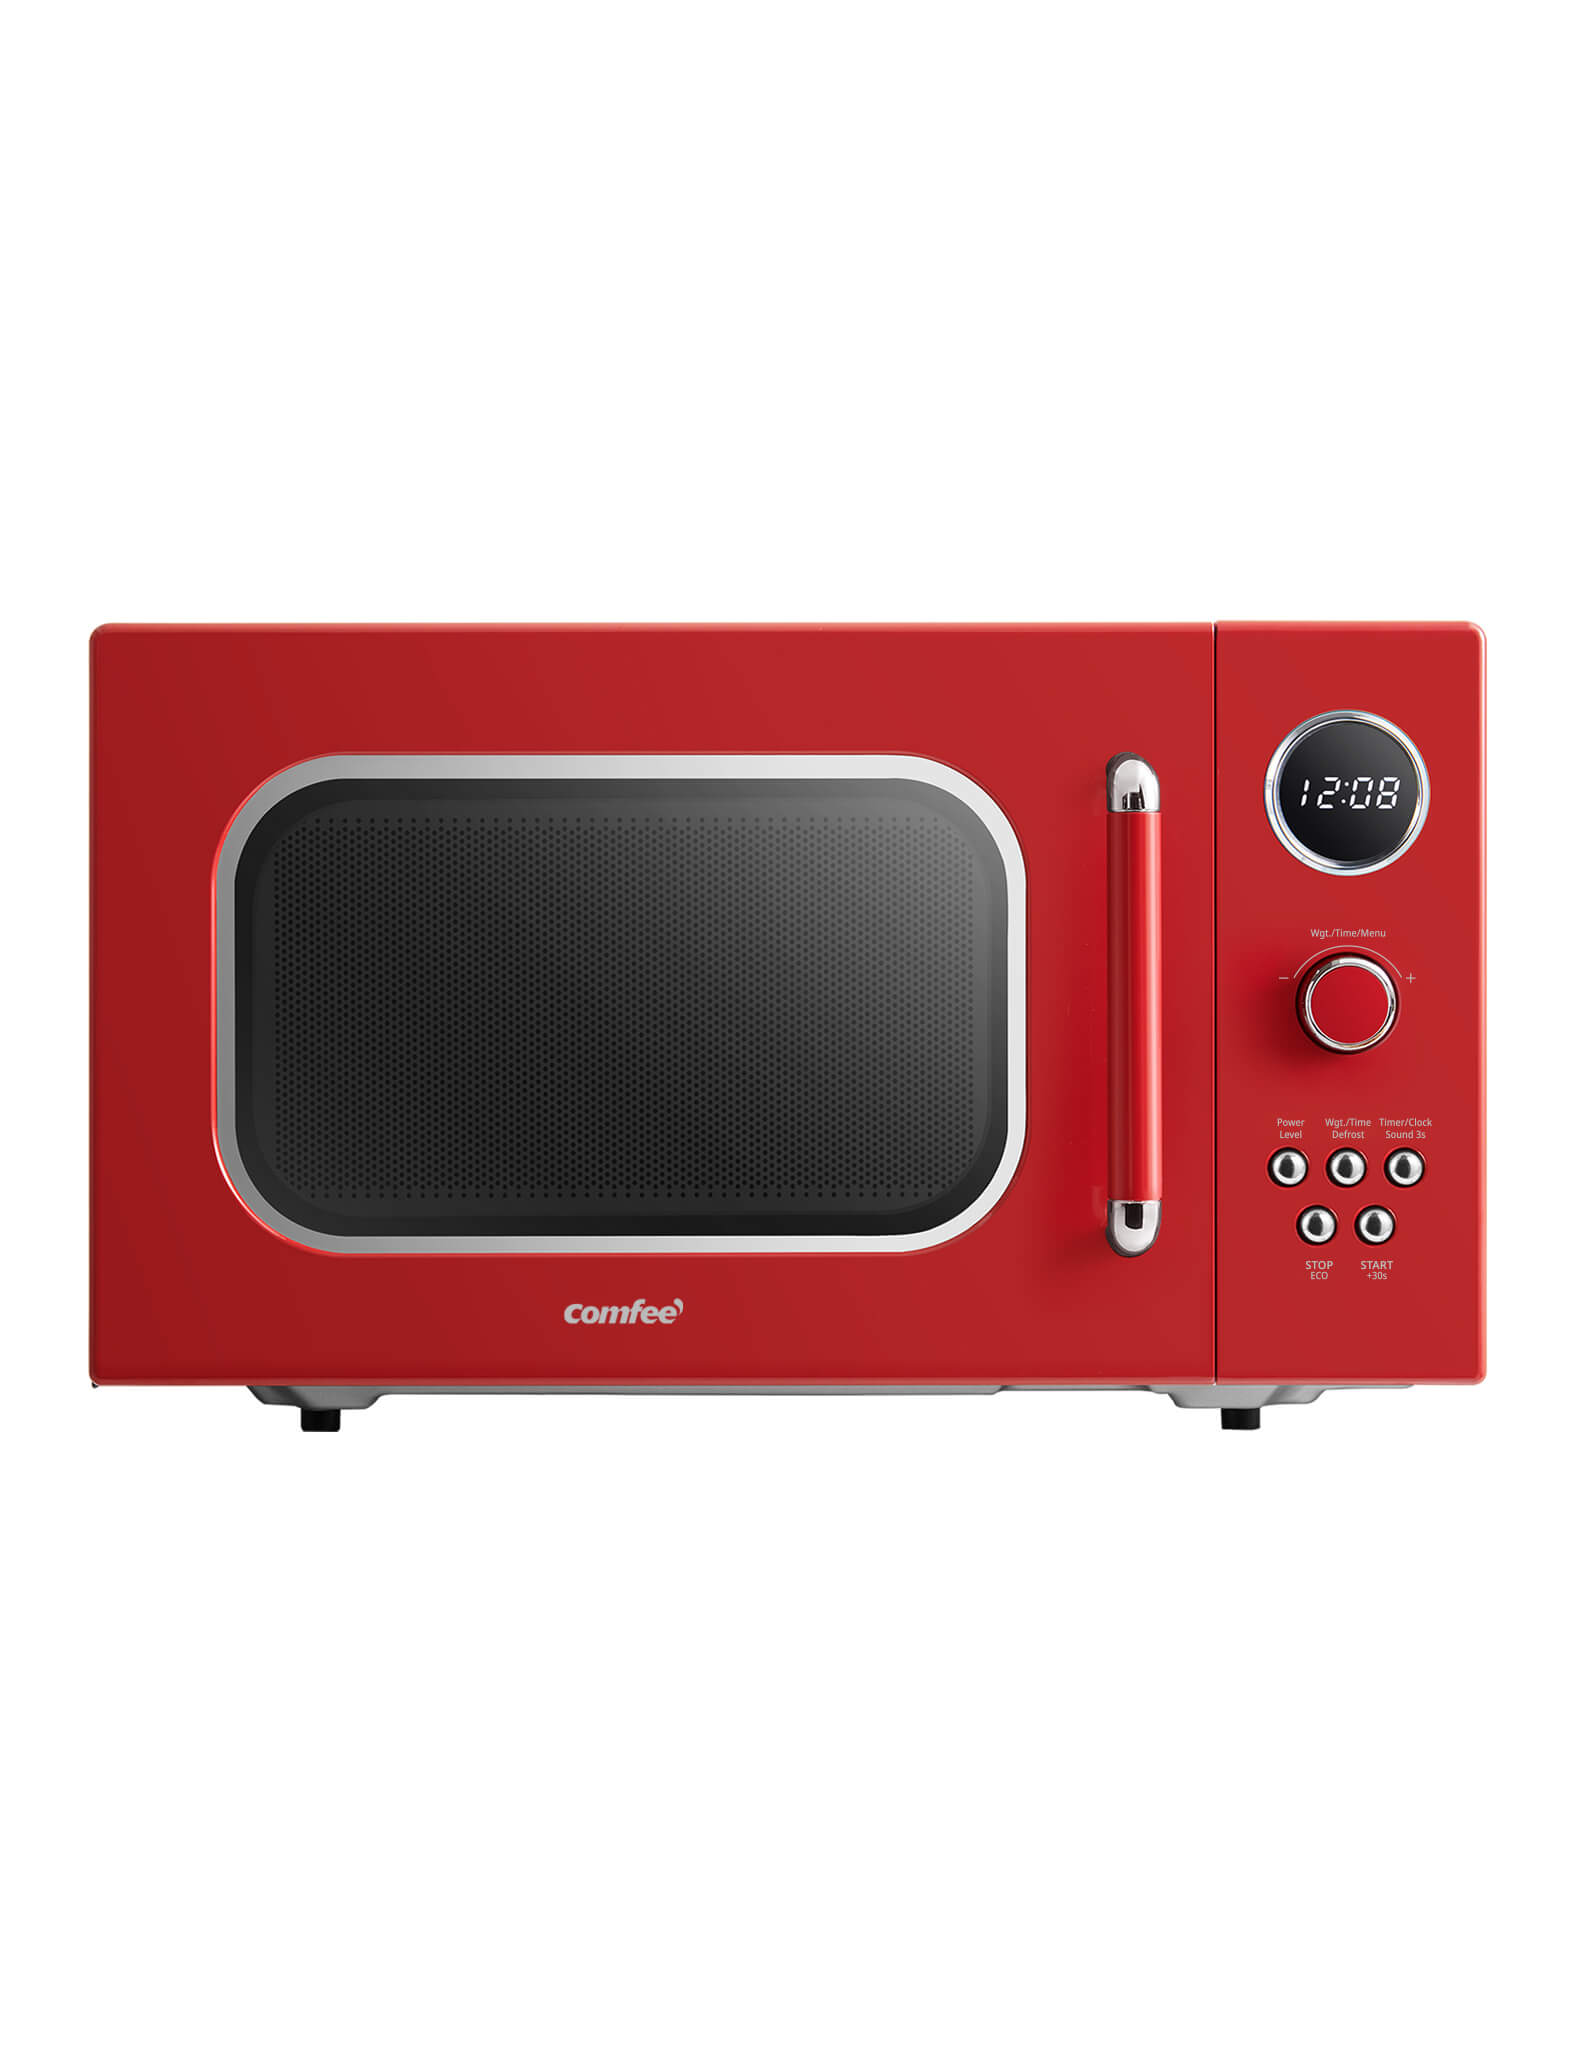 red comfee retro microwave oven